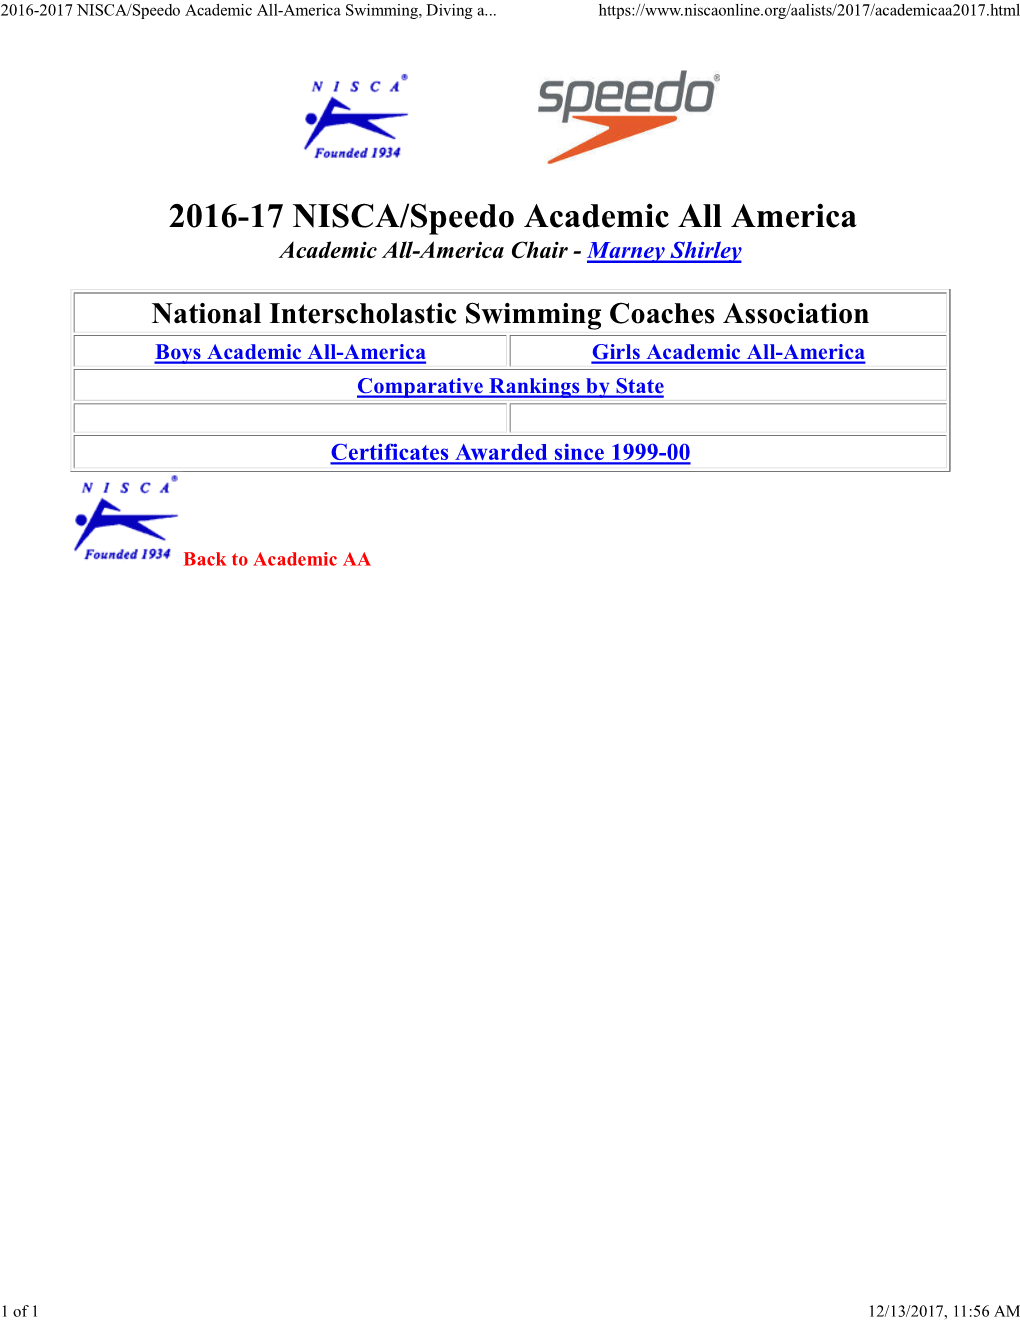 2016-17 NISCA/Speedo Academic All America Academic All-America Chair - Marney Shirley